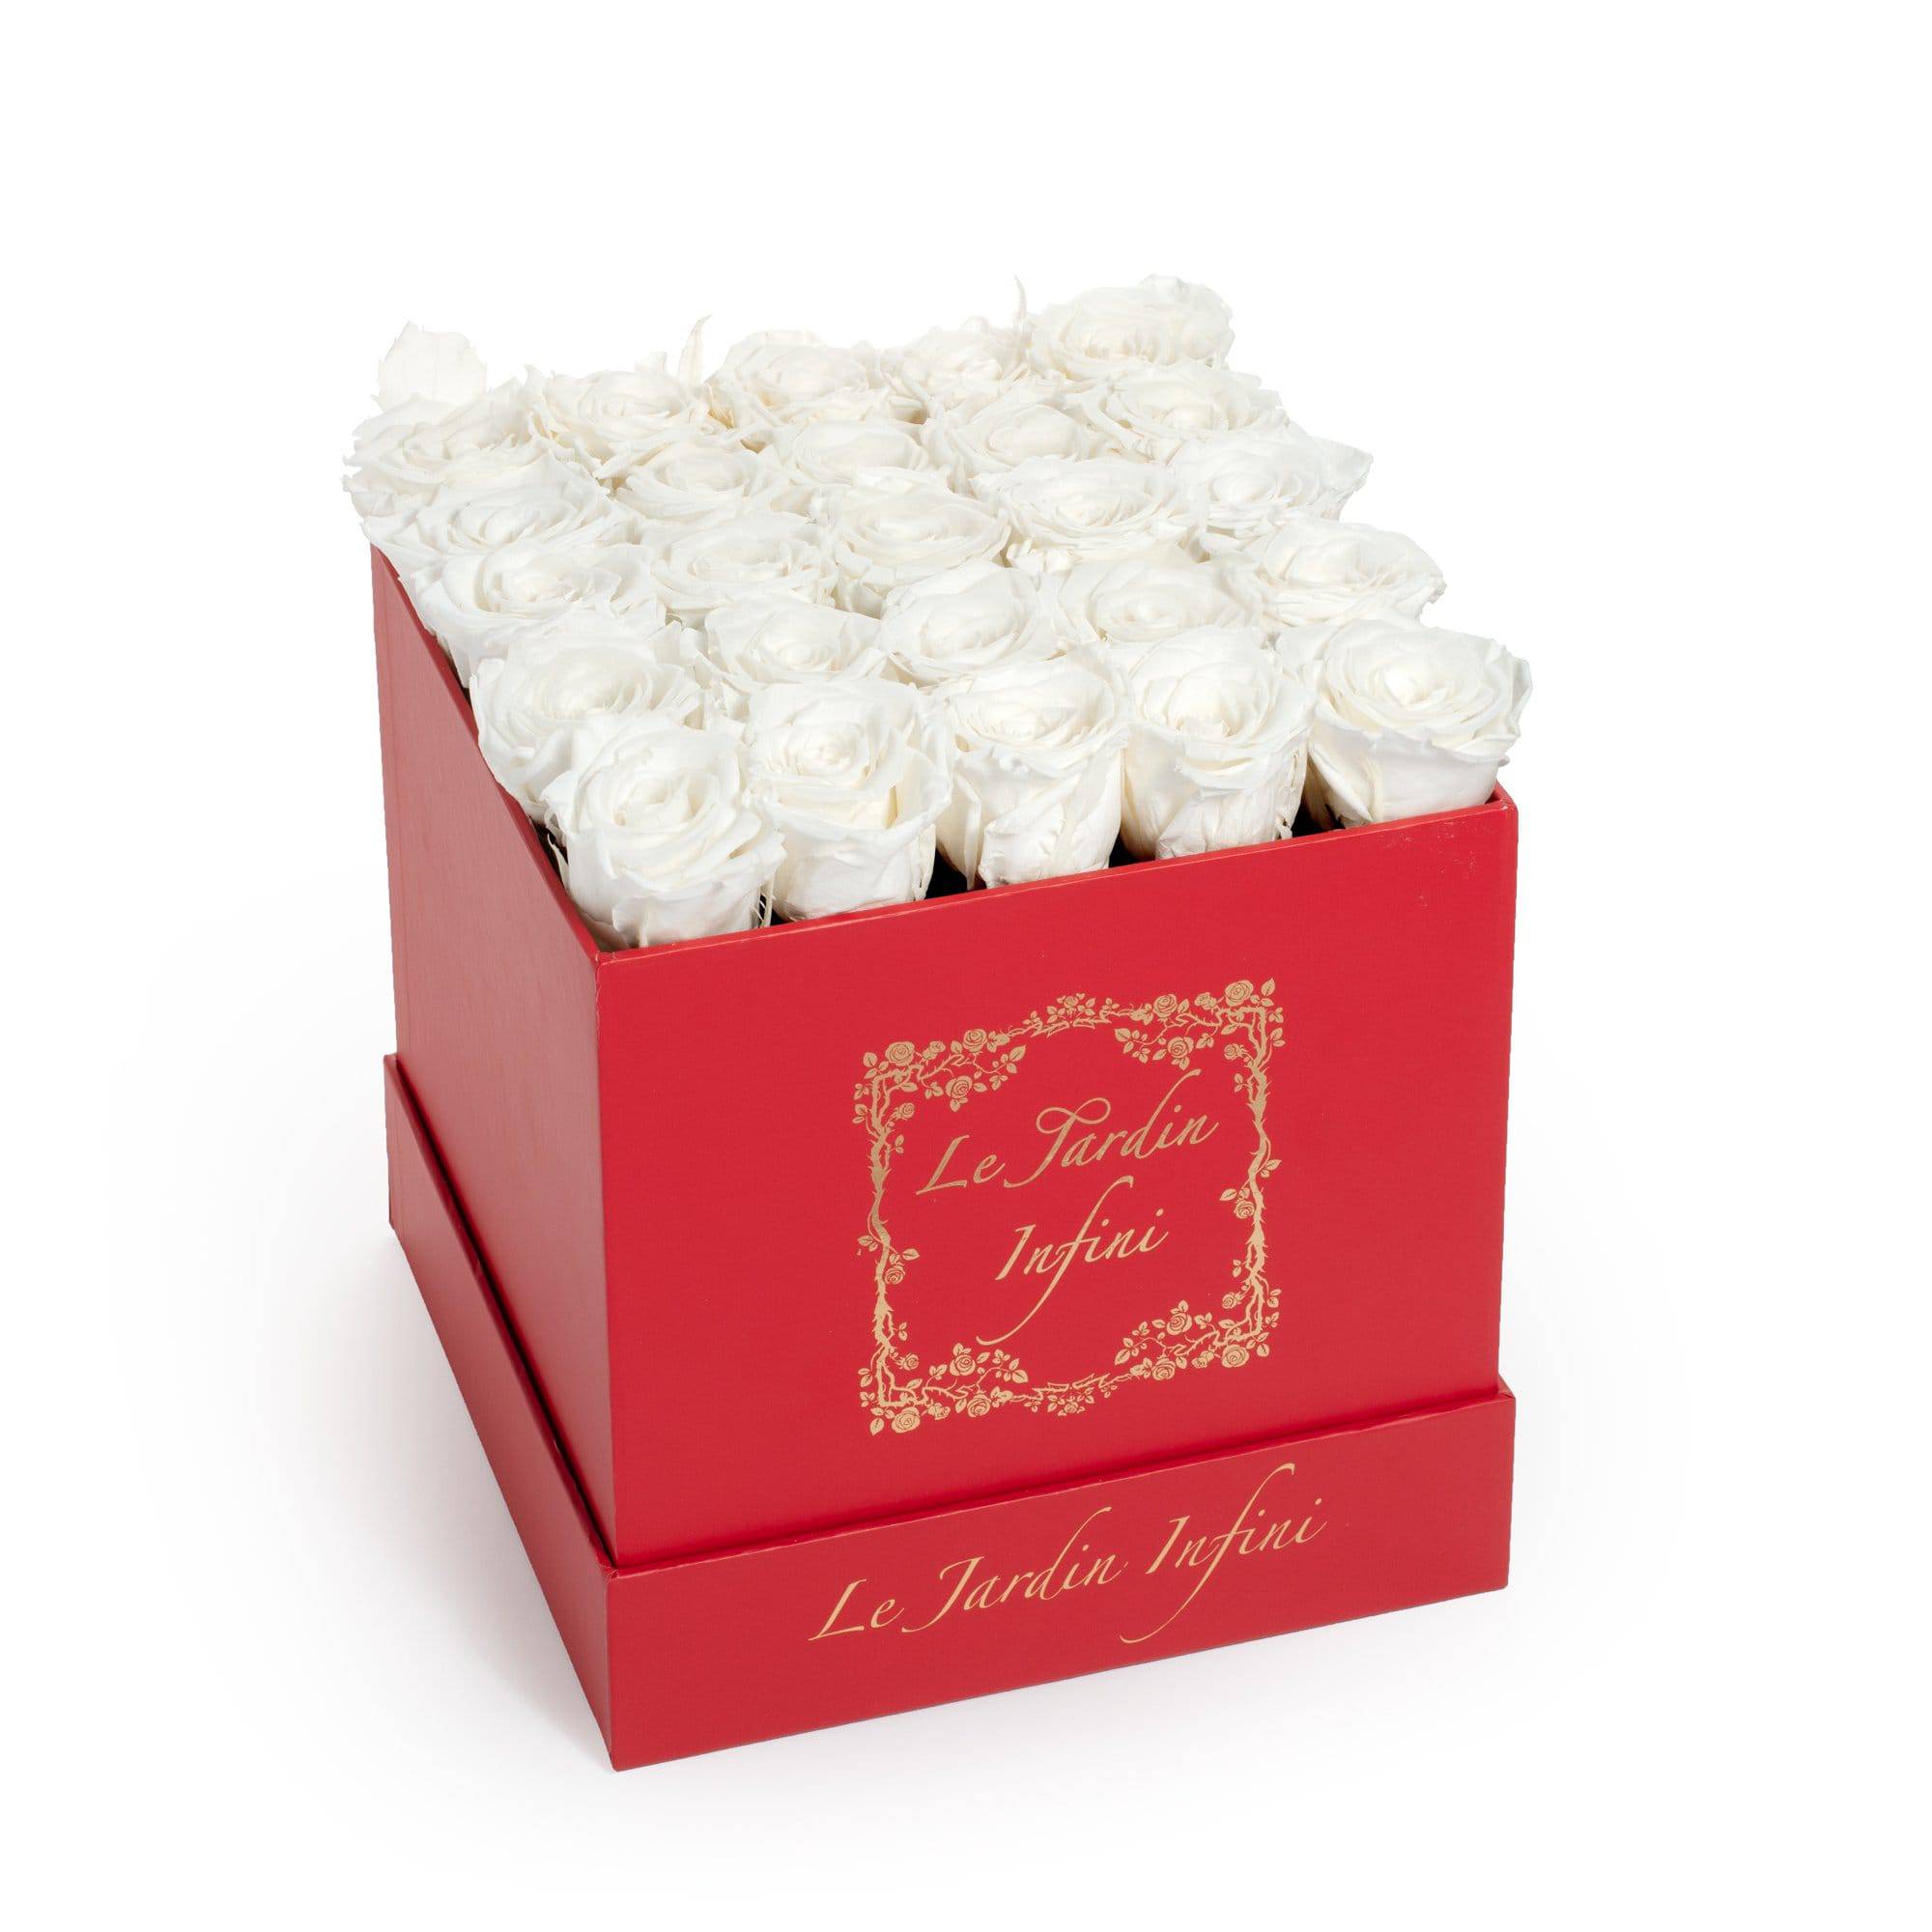 White Preserved Roses - Medium Square Red Box - Le Jardin Infini Roses in a Box